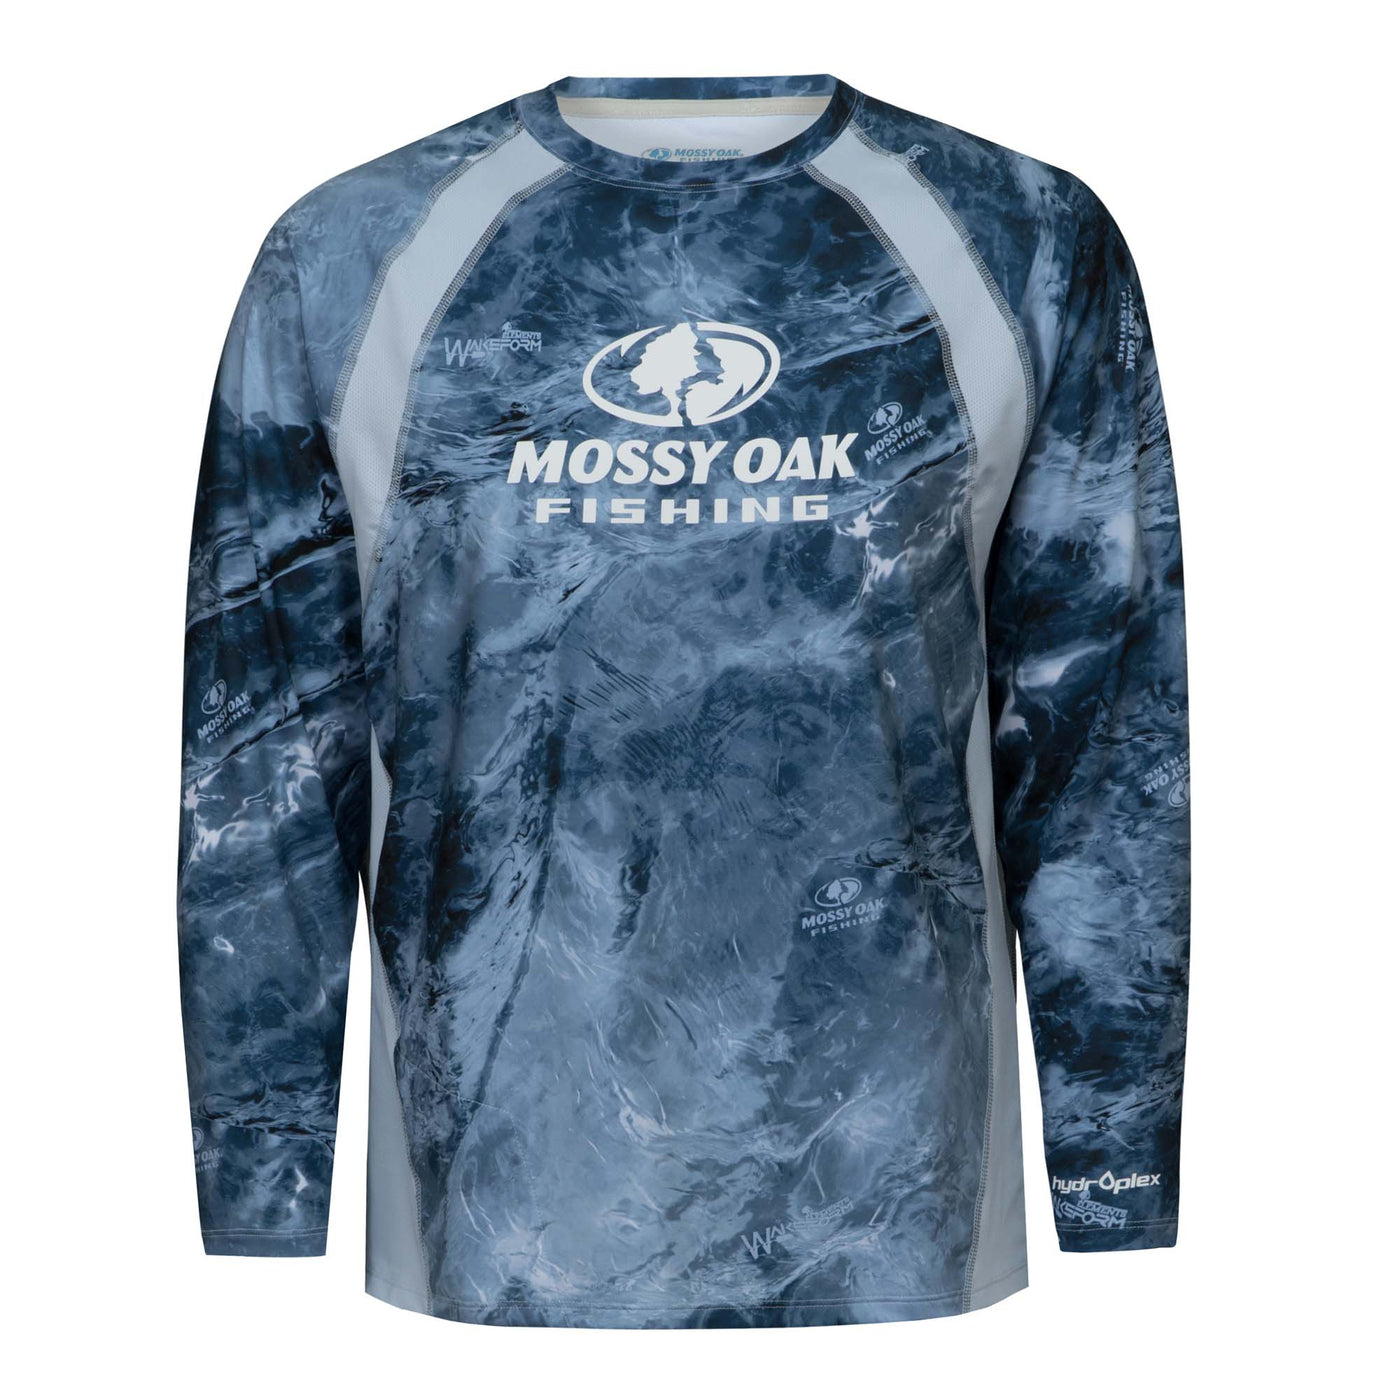 Mossy Oak Elements Men's Long Sleeve Performance Fishing Shirt